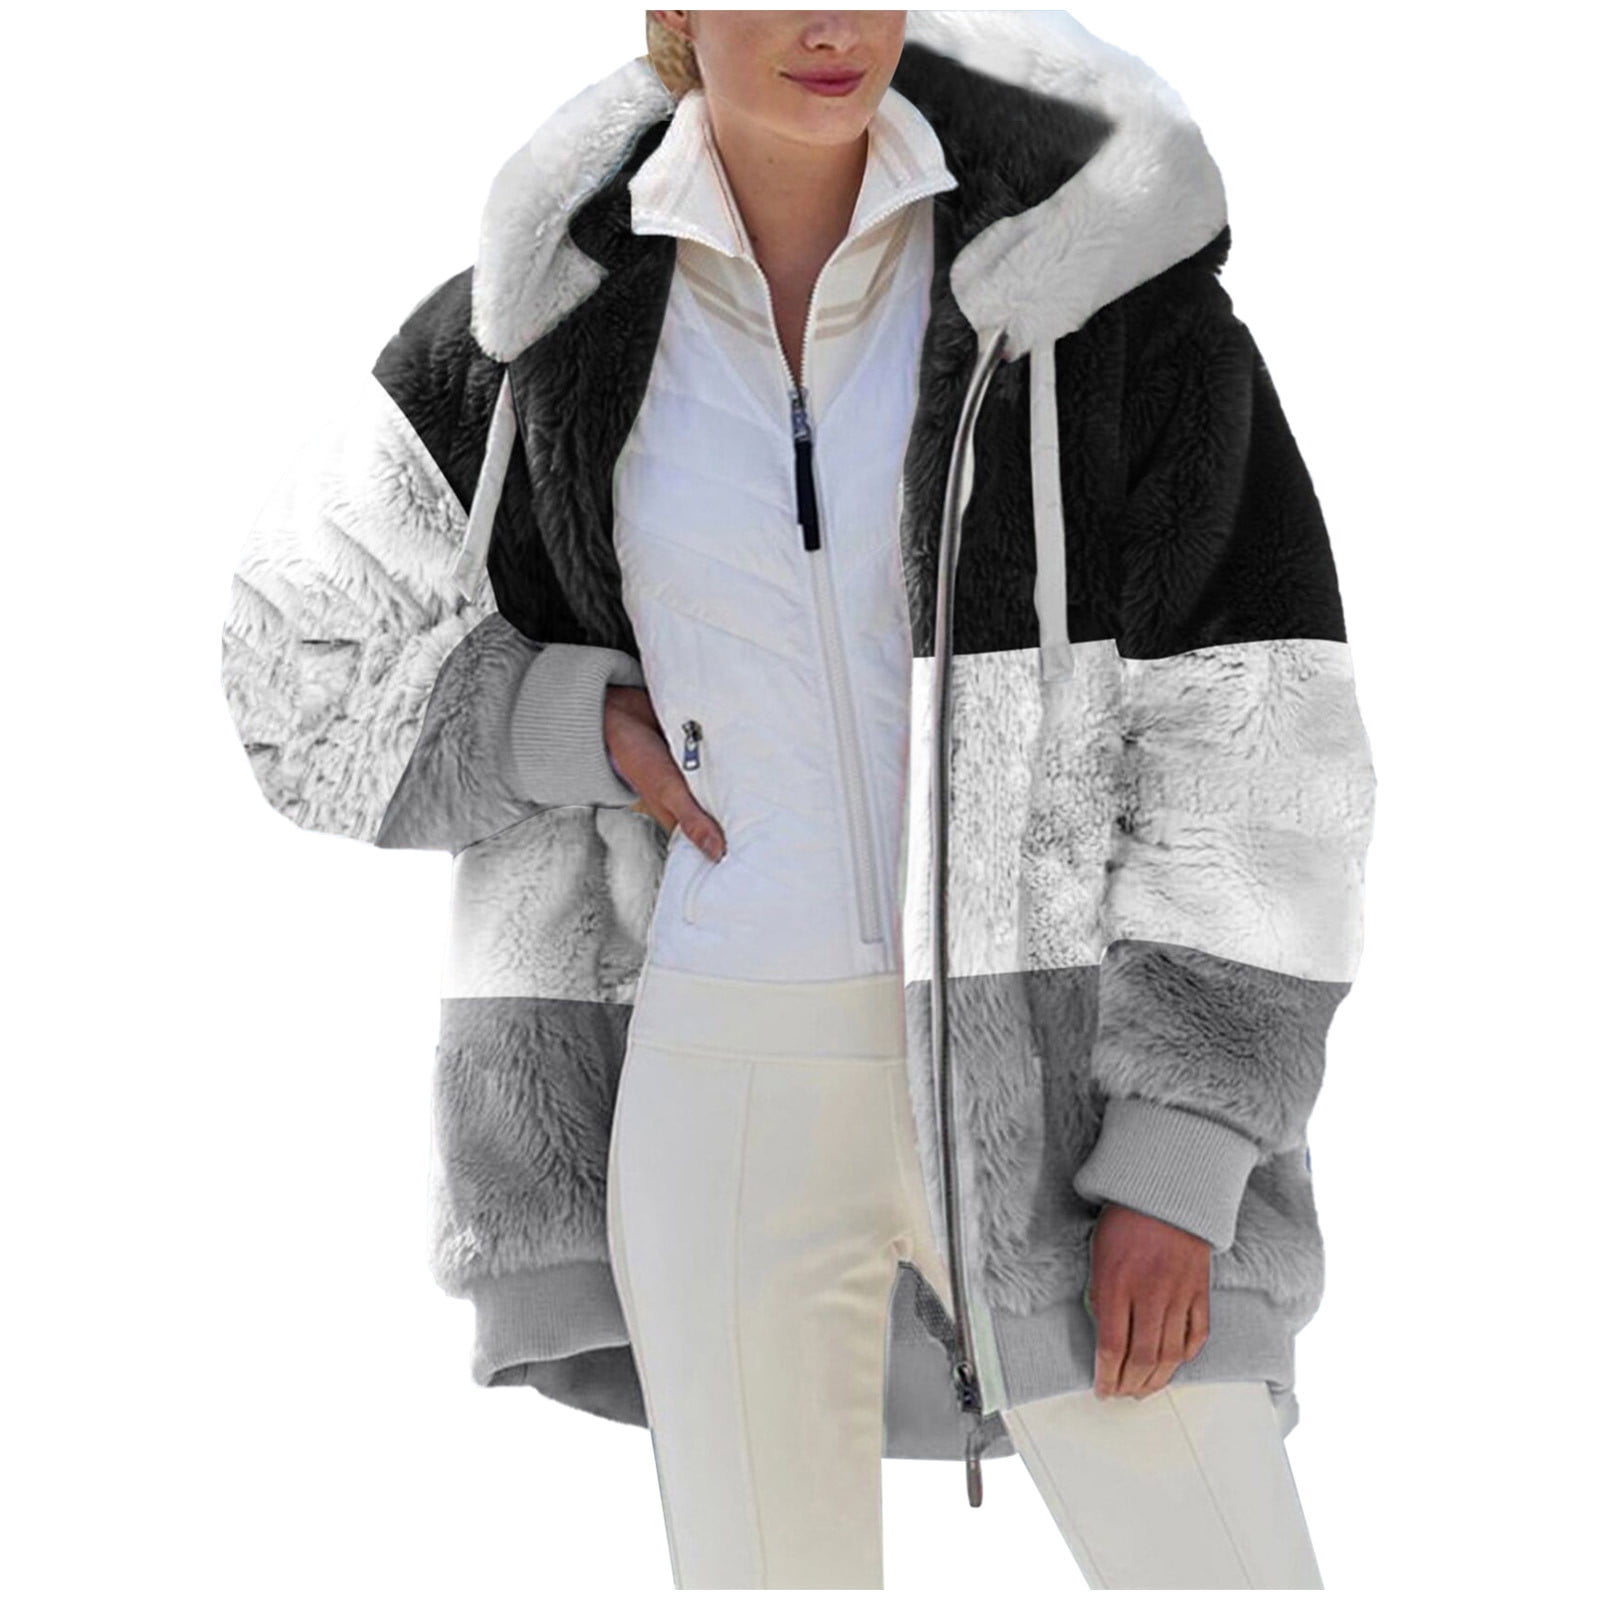 HTNBO Outerwear Long Sleeve Coat for Women Casual Fall Winter Zip up ...